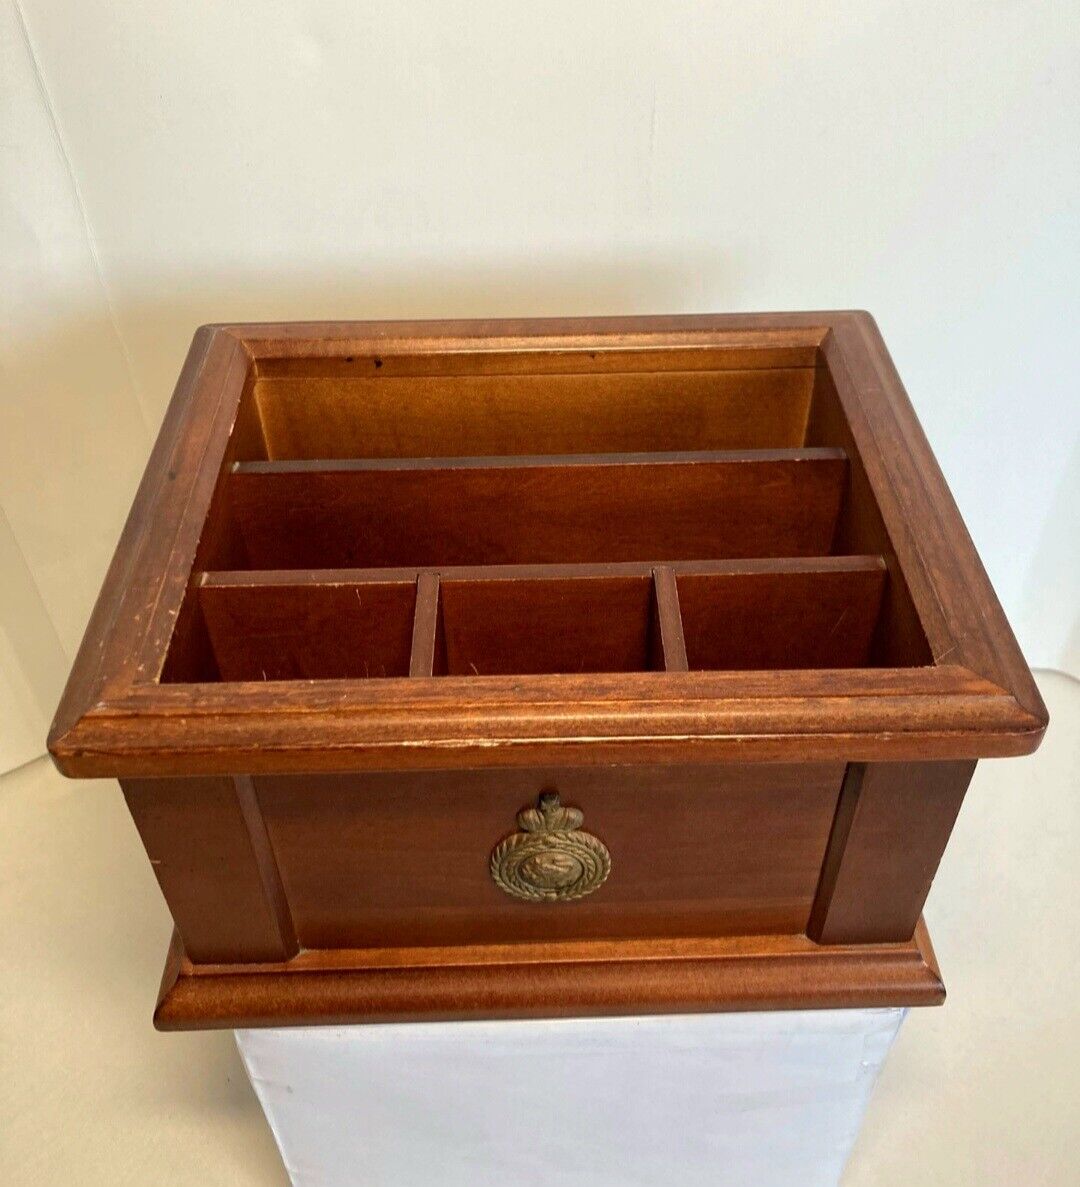 1997 The Bombay Company Desk Organizer Box Solid Wood Office Stationary Storage